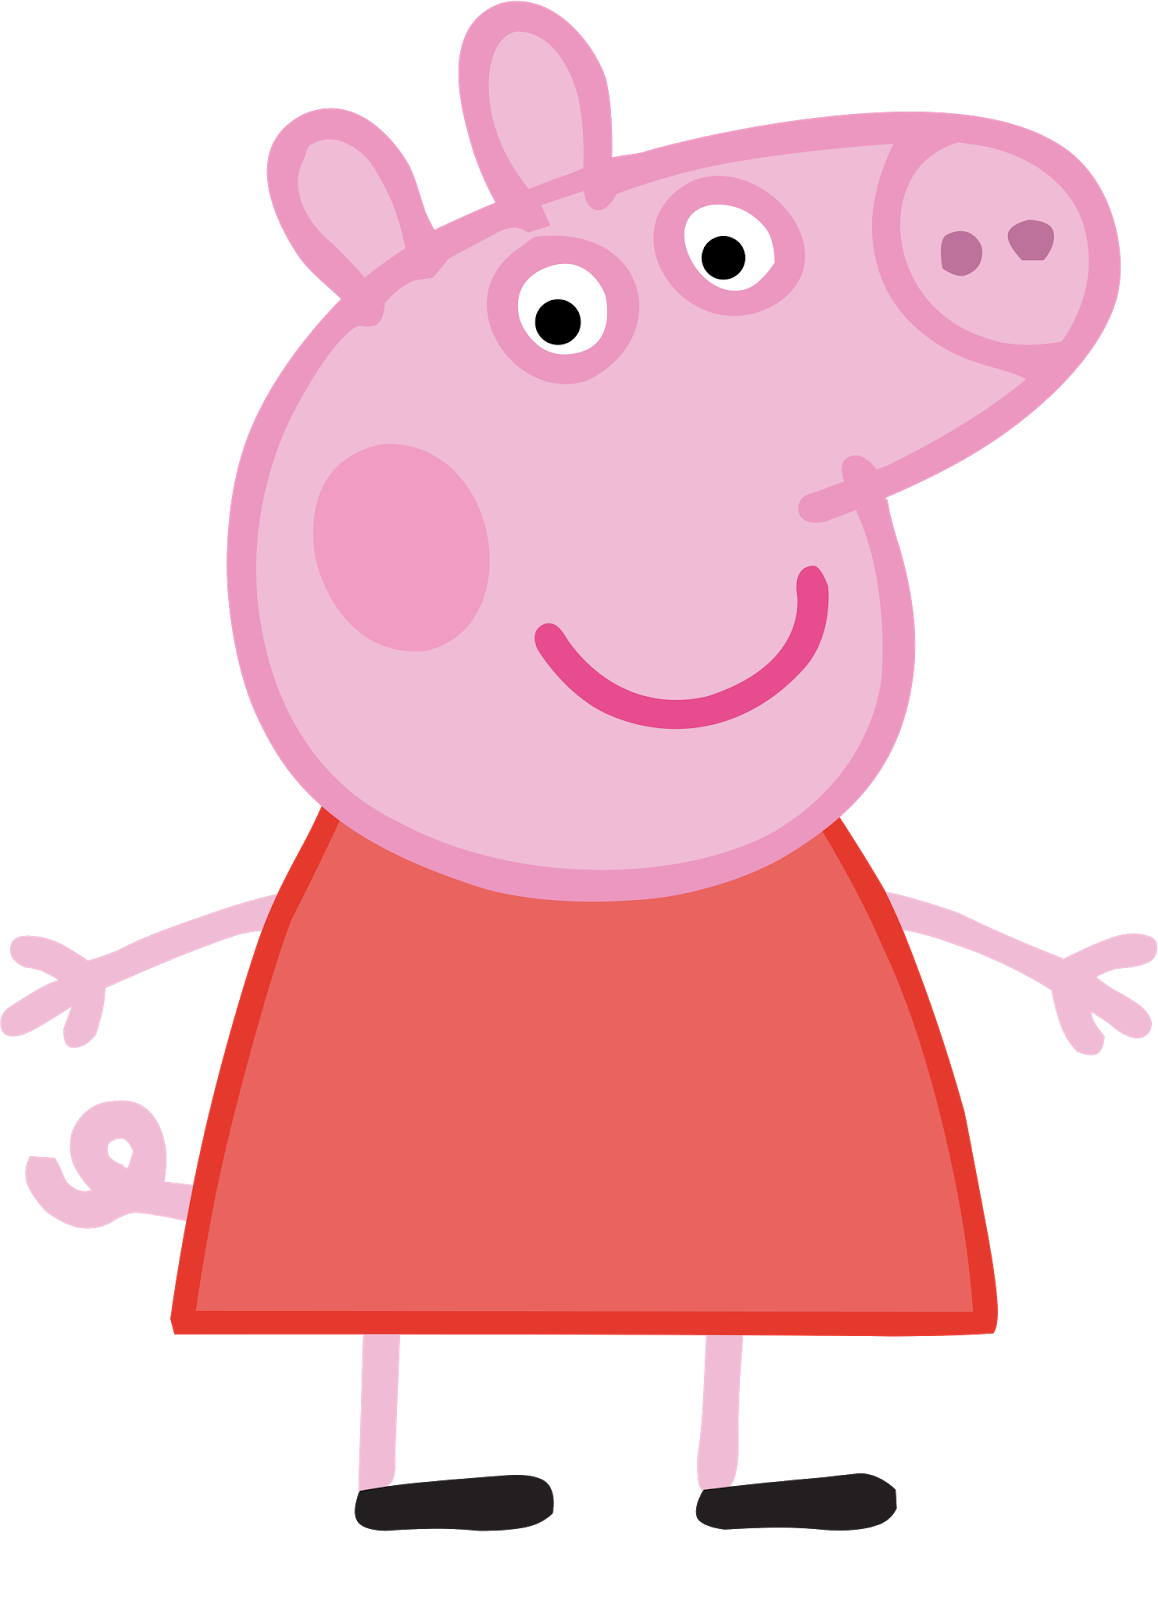 Peppa Pig (personagem), Wiki Peppa Pig